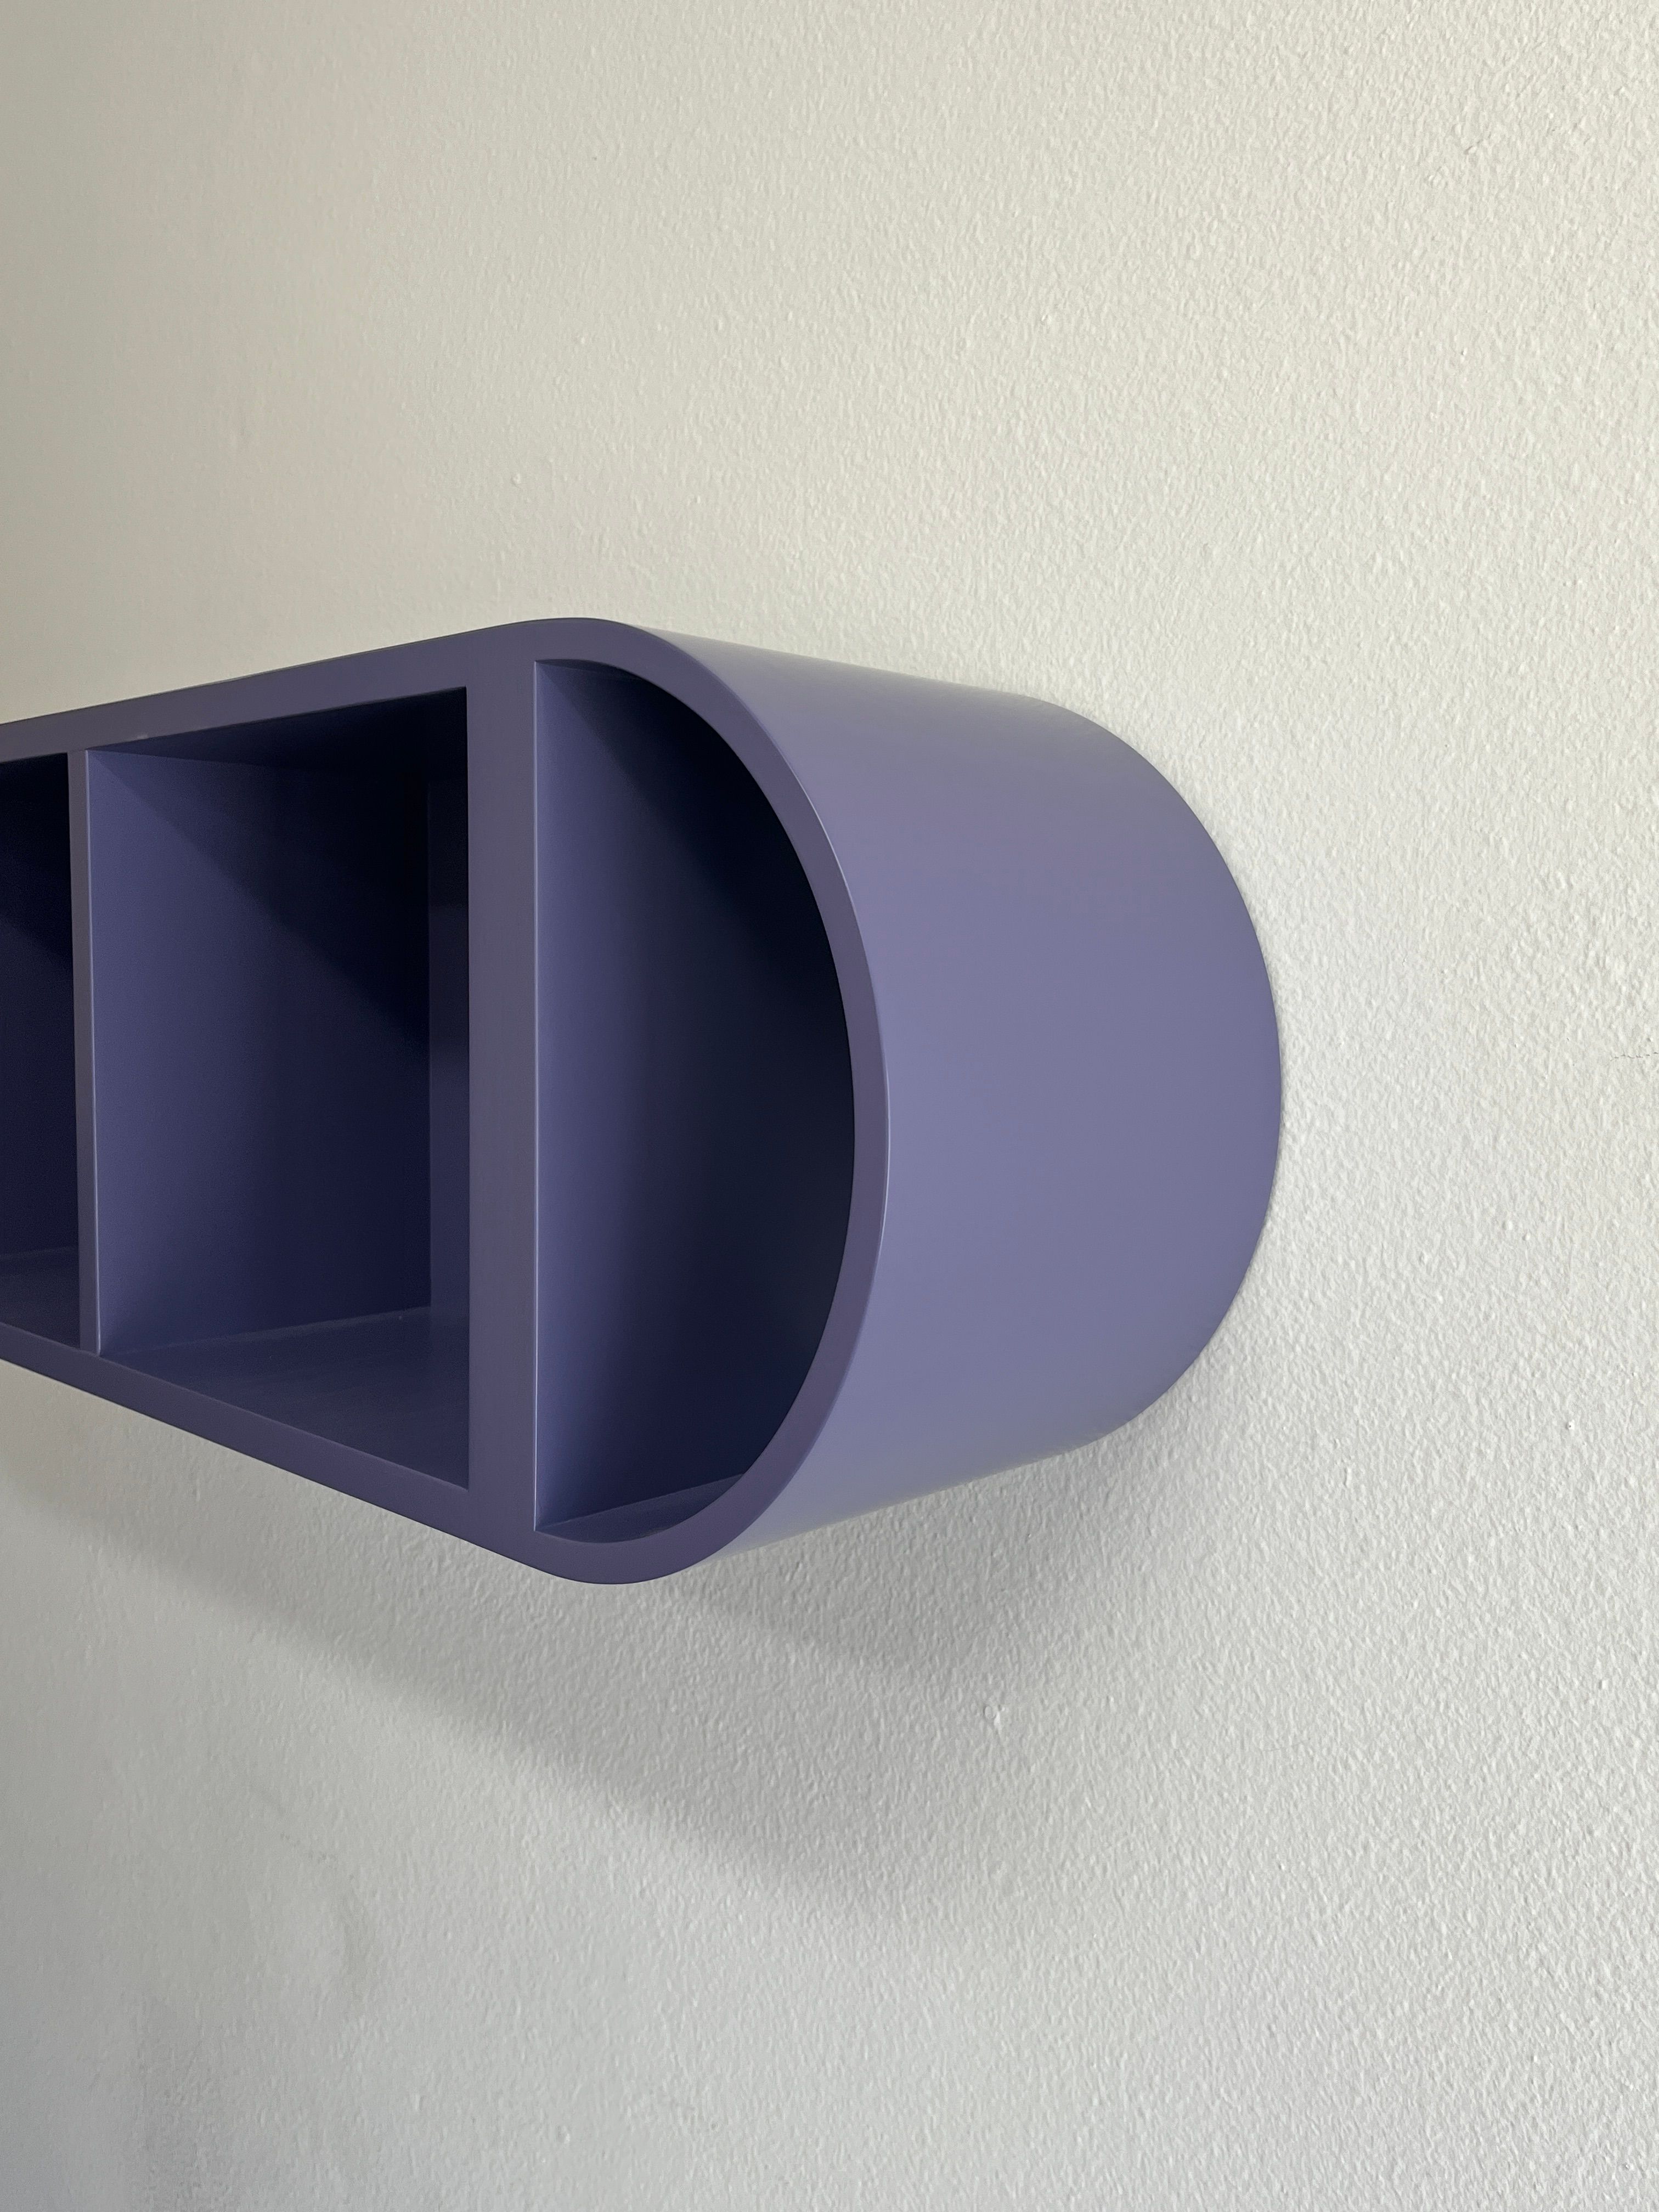  Wall Hanging Shelf - Purple product image 2